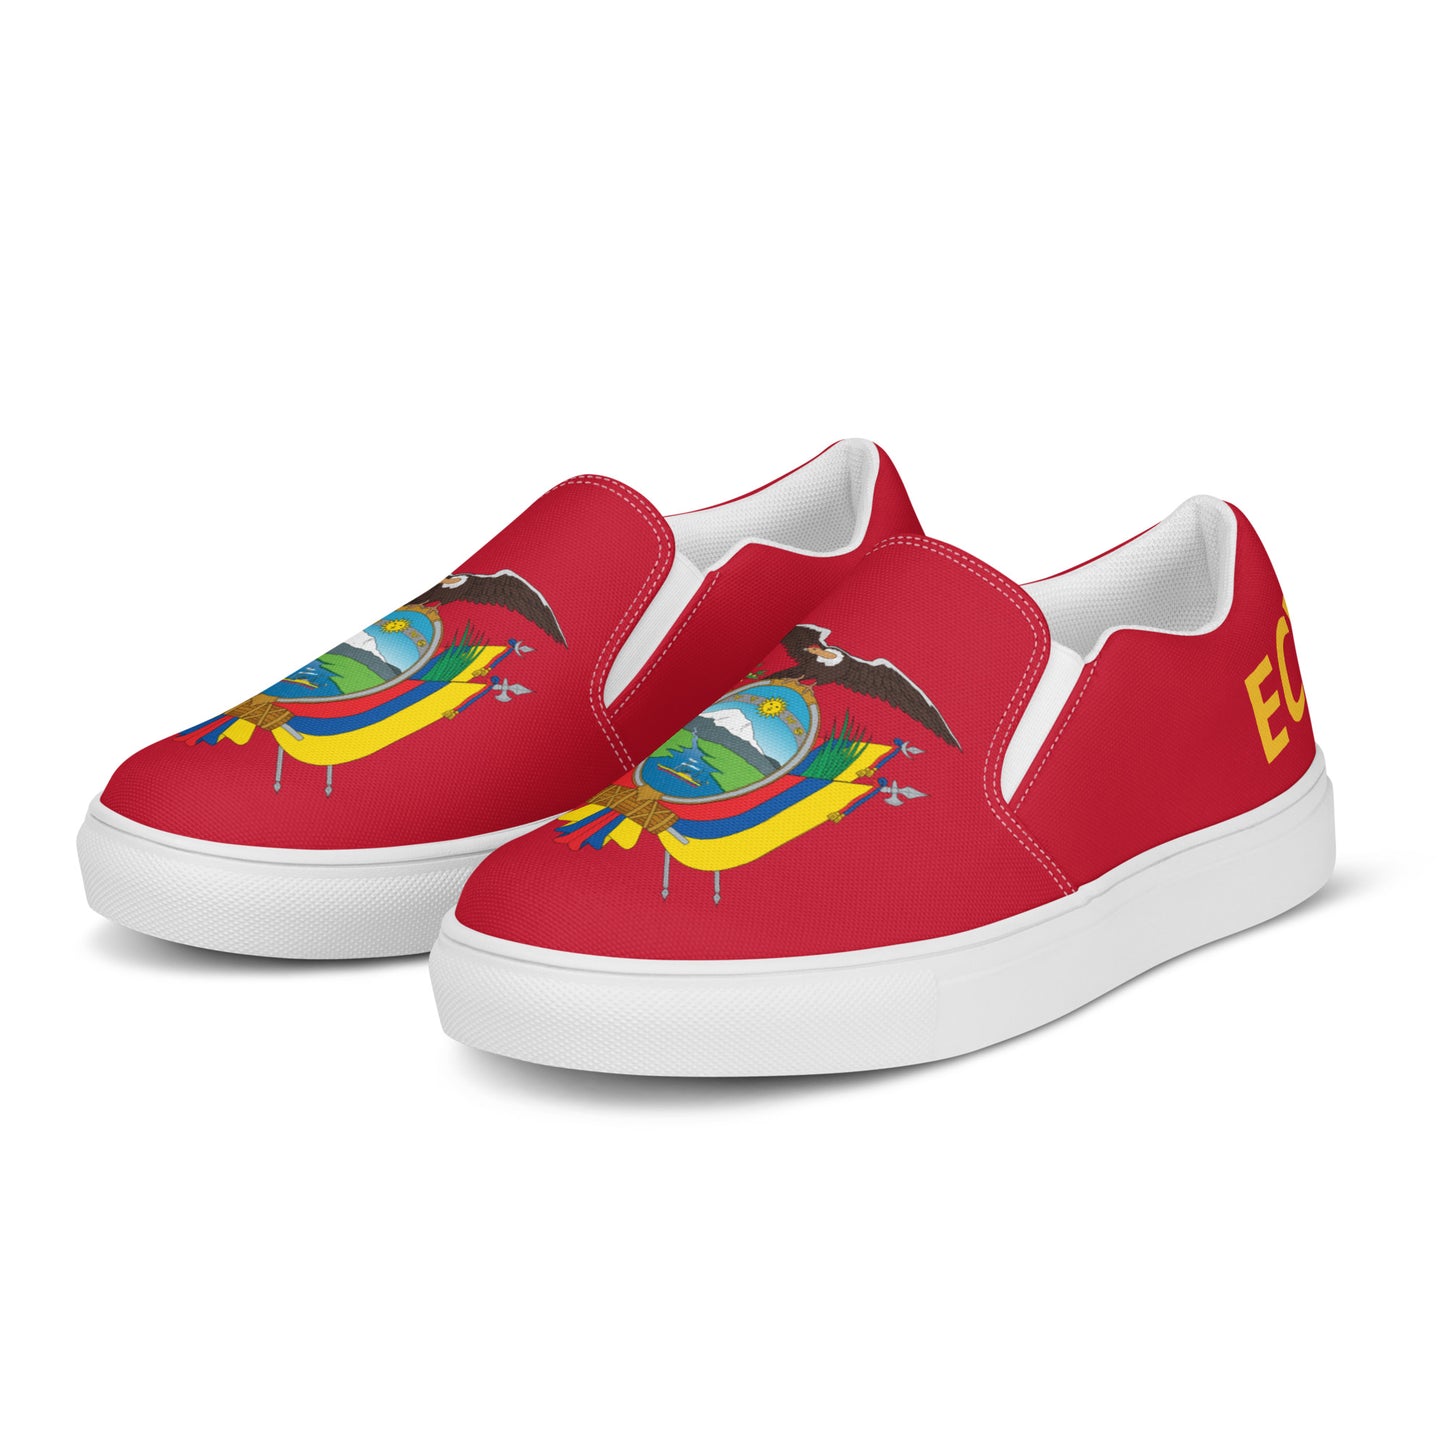 Ecuador - Men - Red - Slip-on shoes